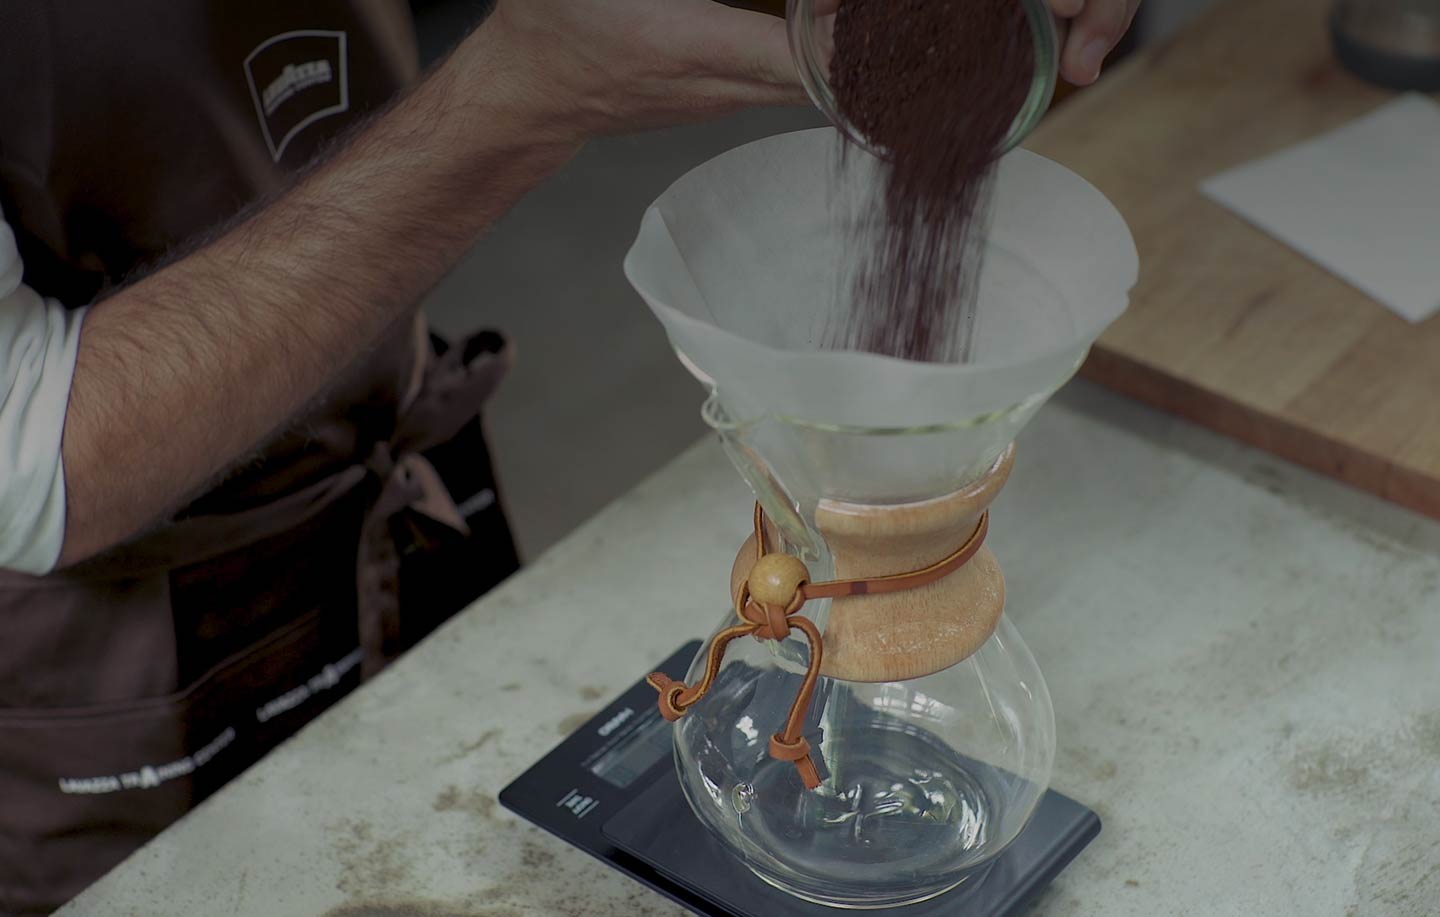 How to make coffee using the Chemex method